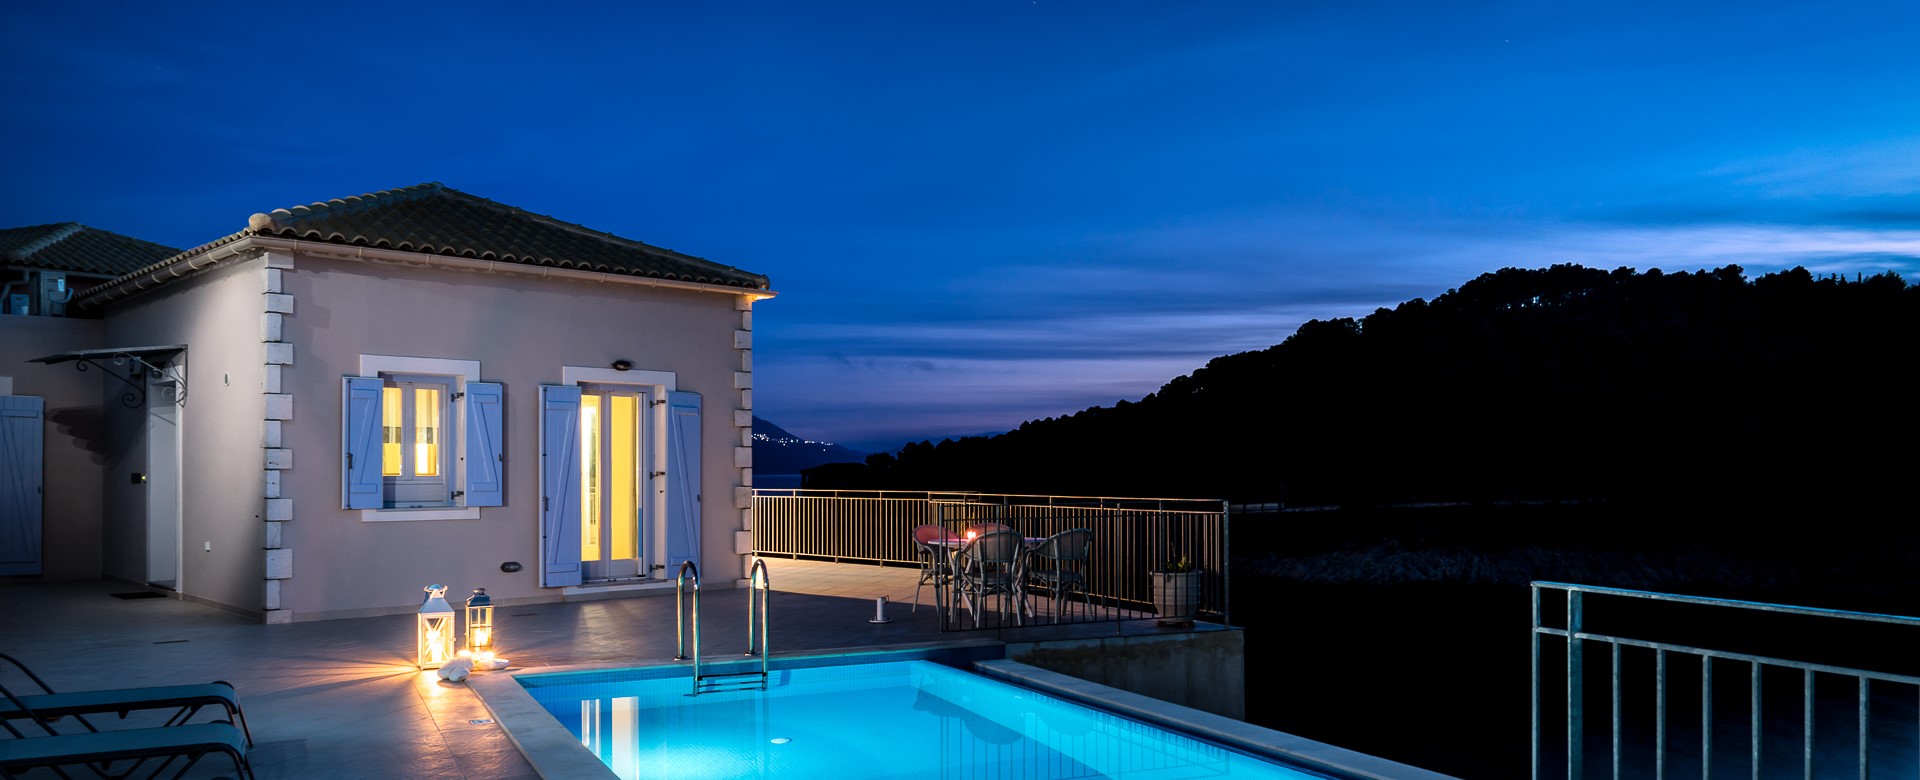 Mood lighting and an infinity pool ready for an evening swim at Villa Plori, Assos, Kefalonia